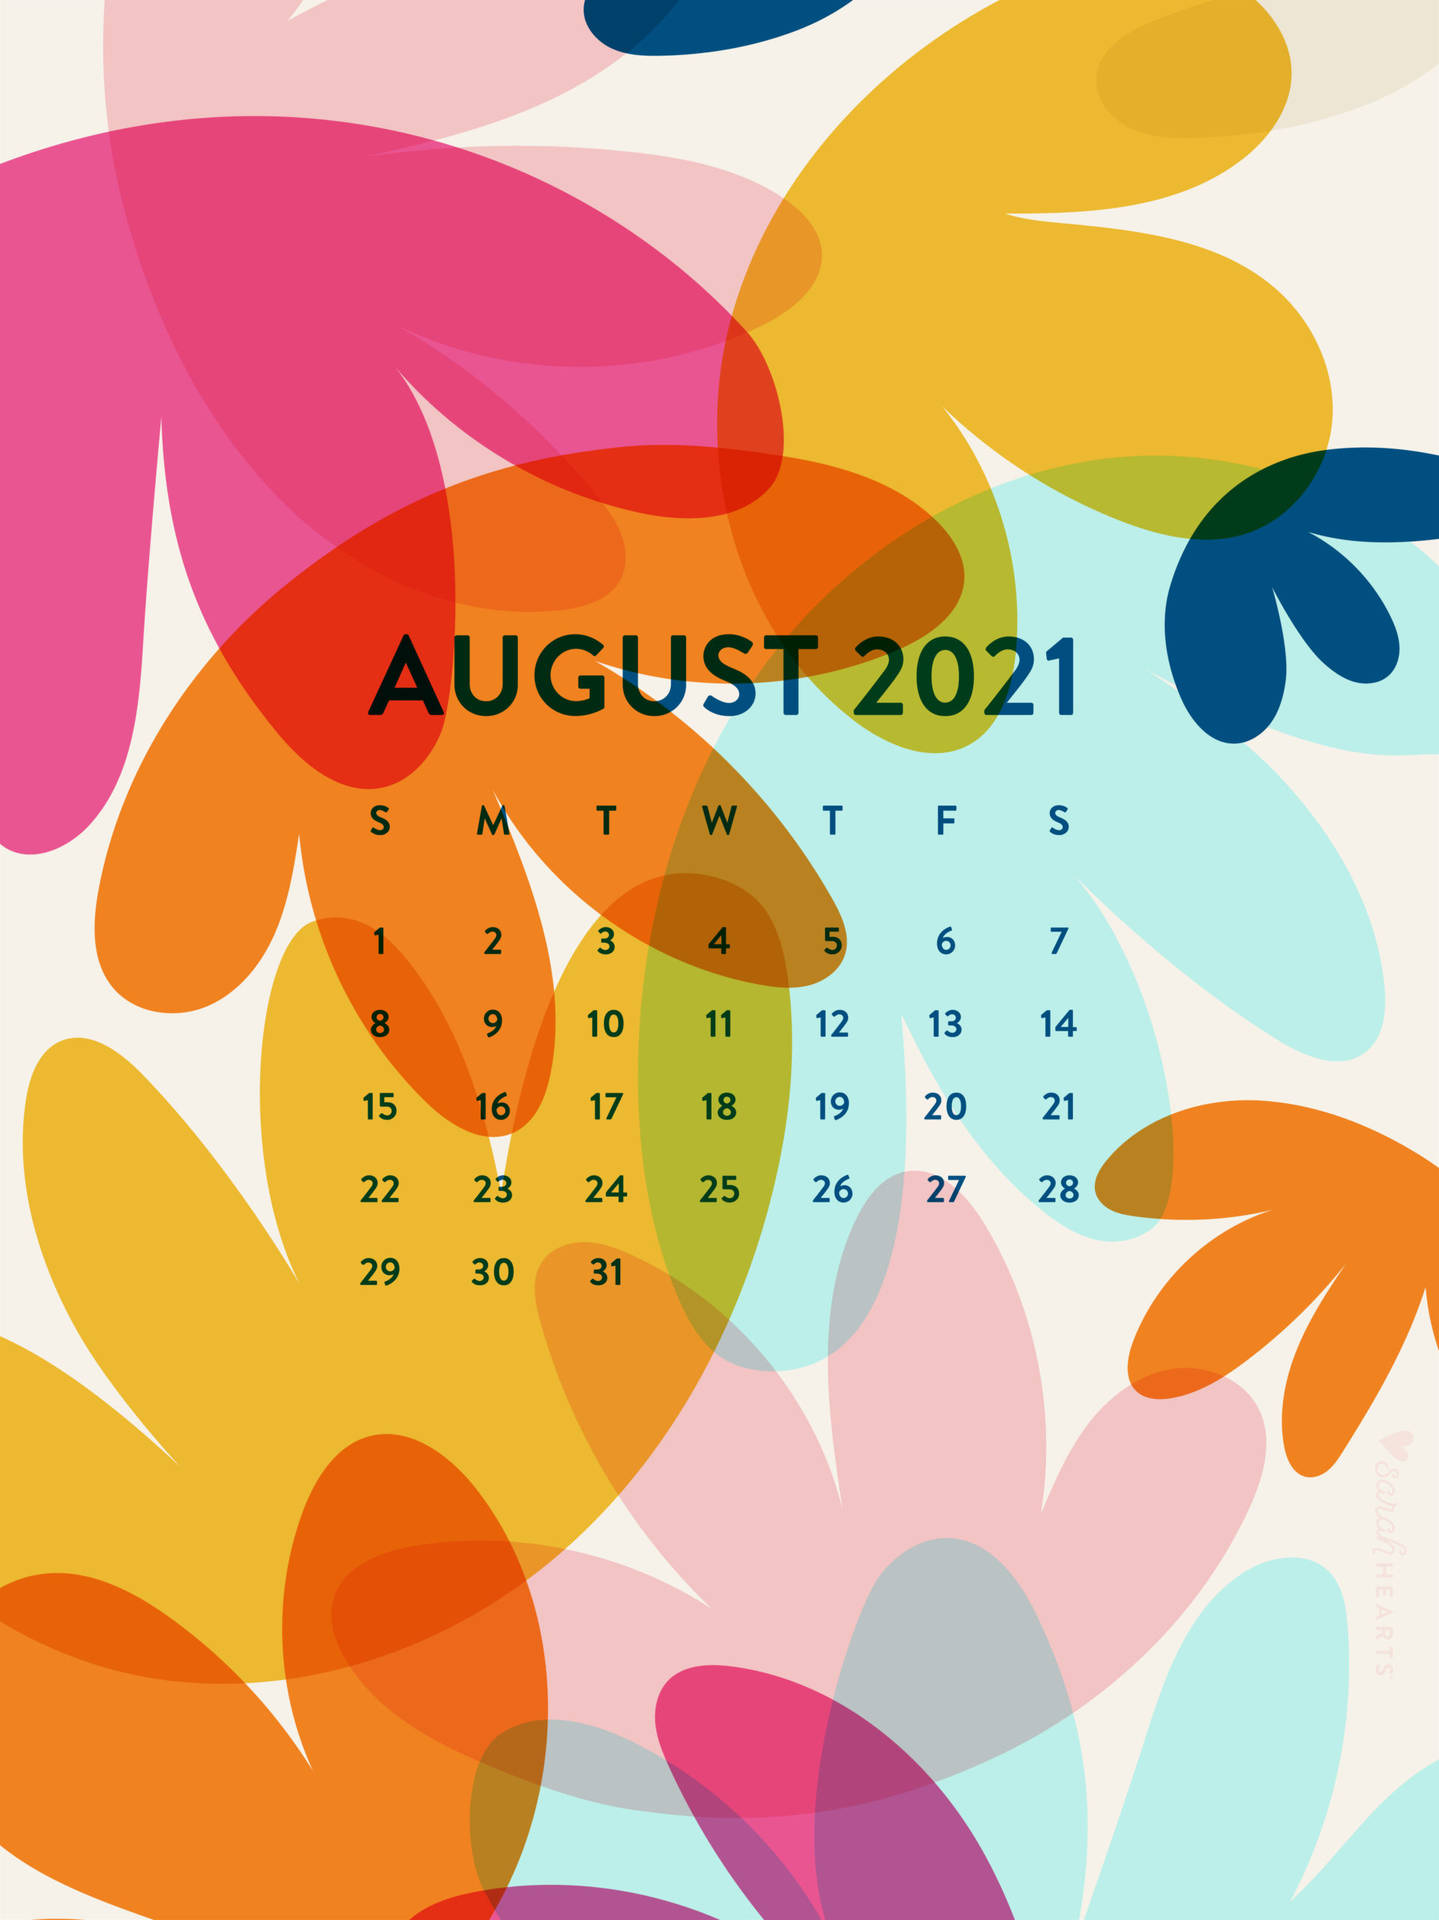 Get organised with August 2021 Calendar Wallpaper